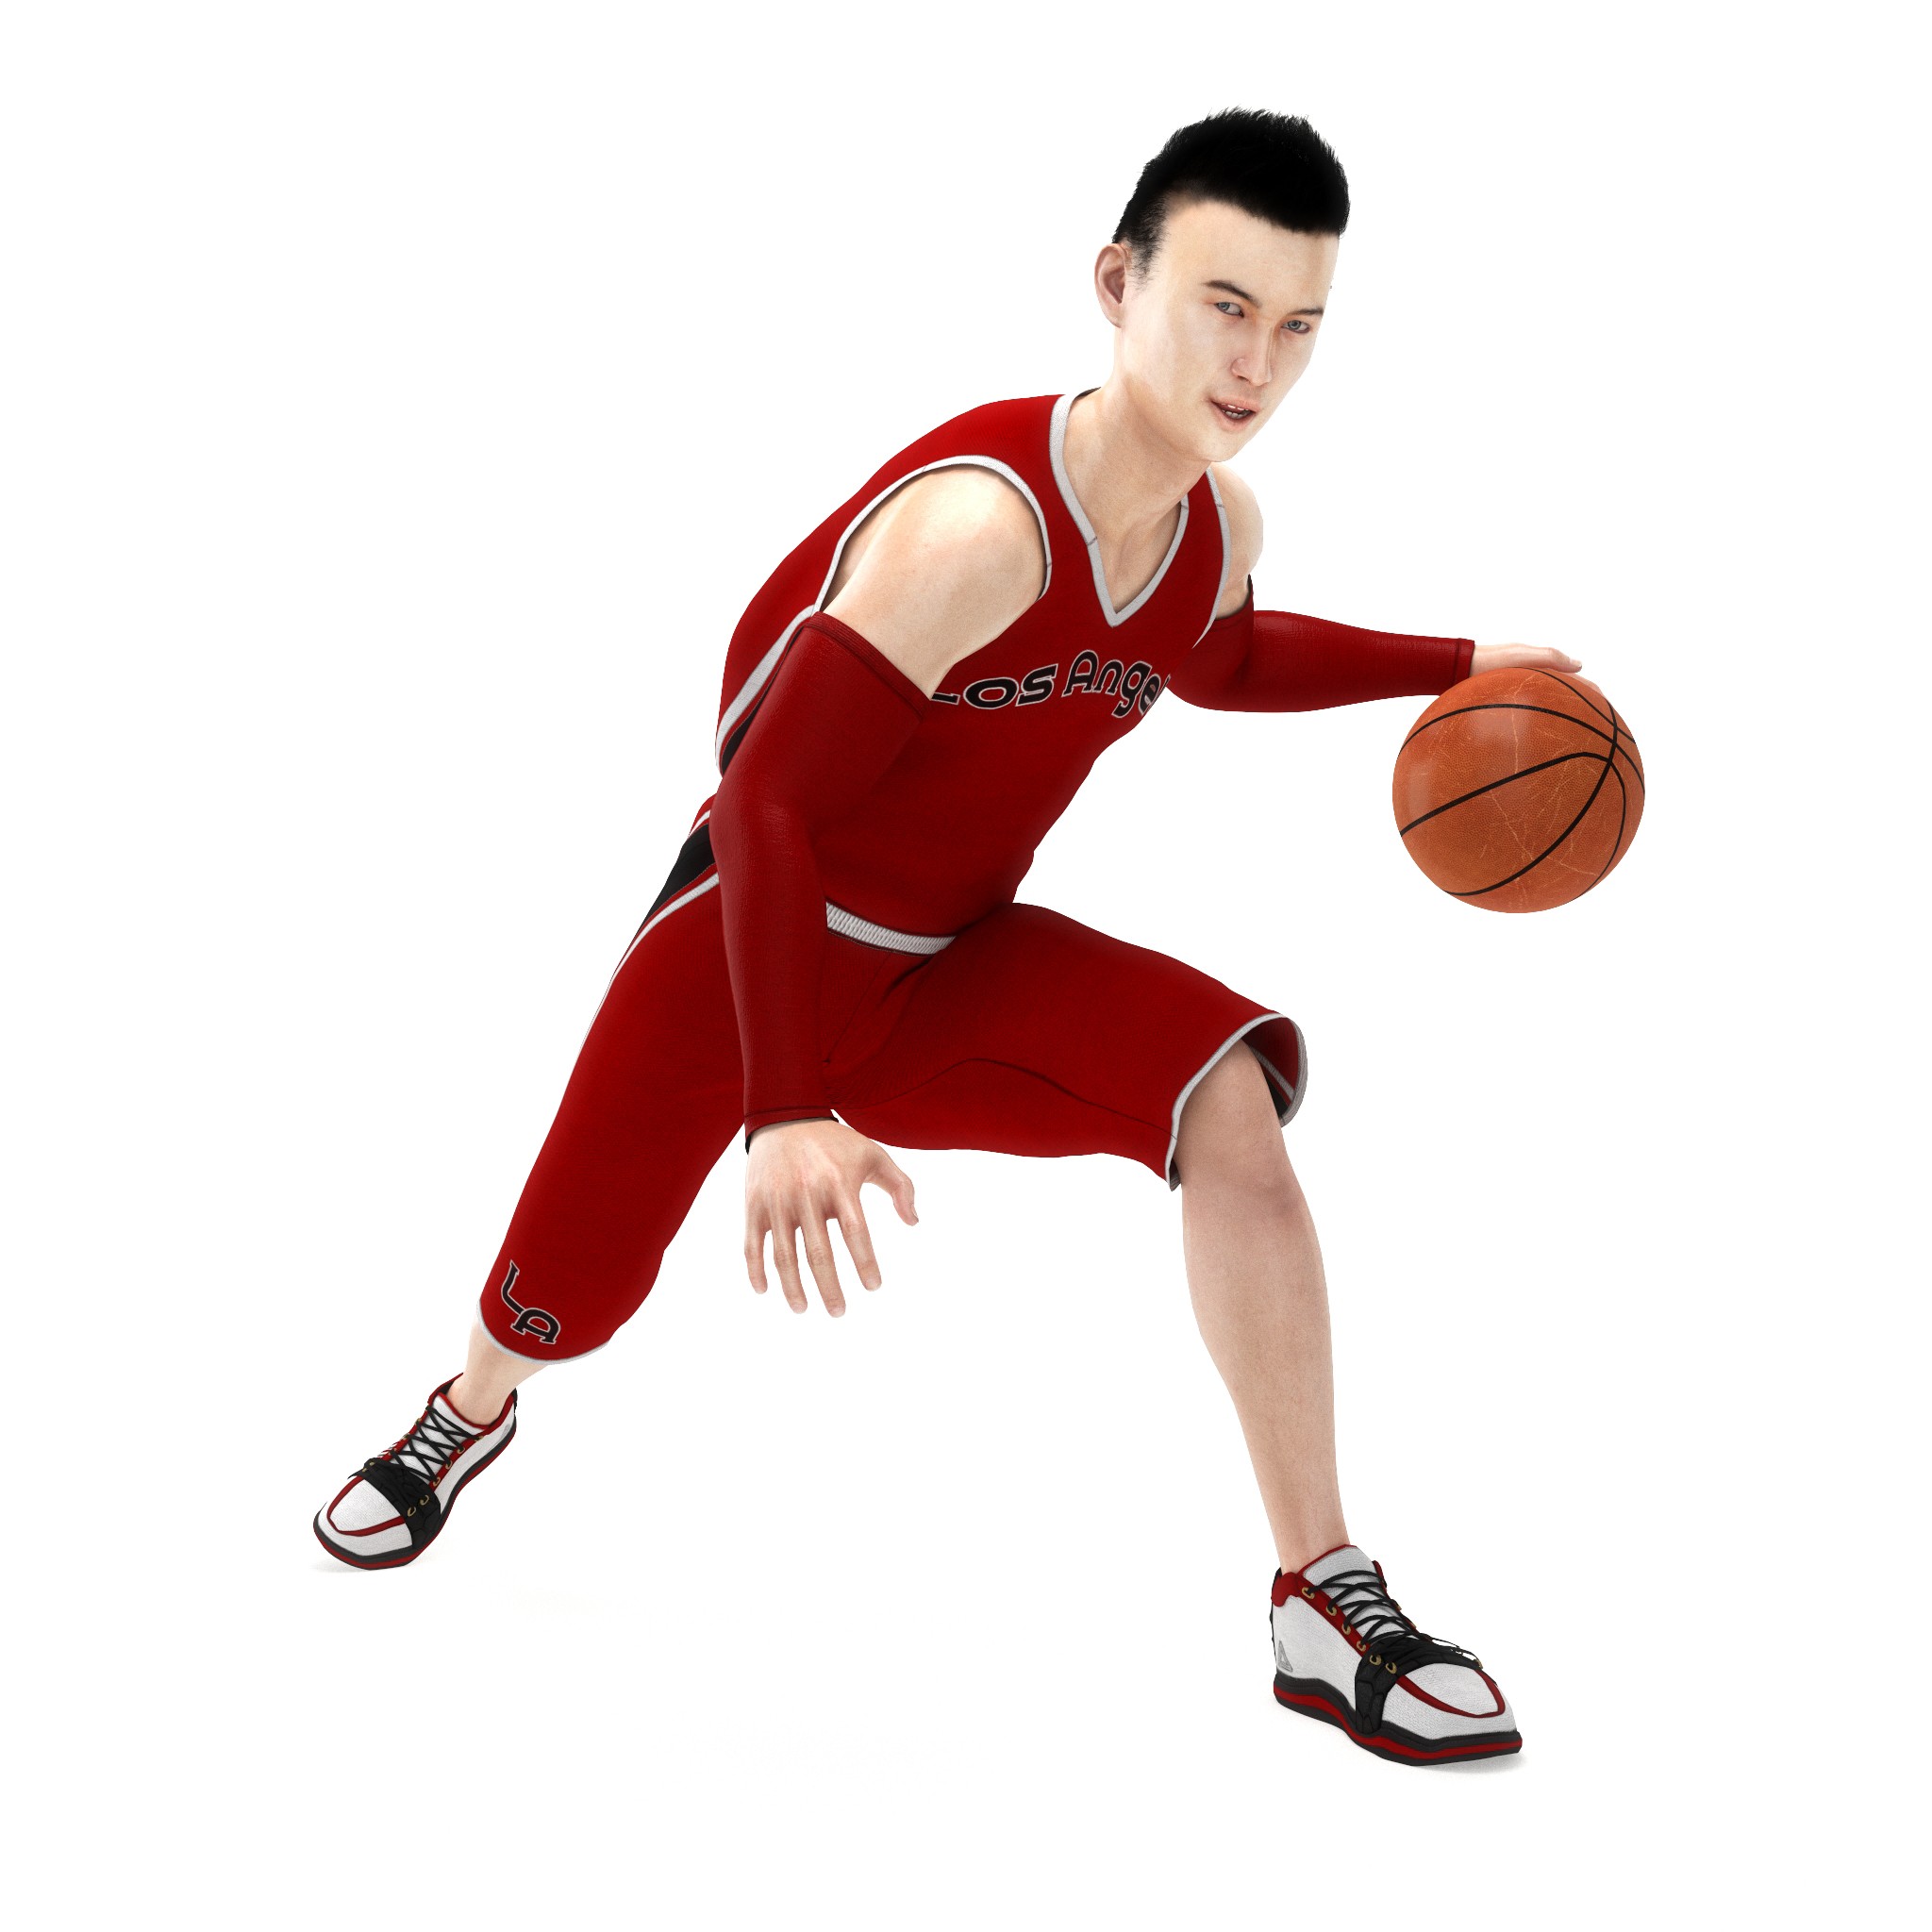 BasketballBoy_pose2.jpg